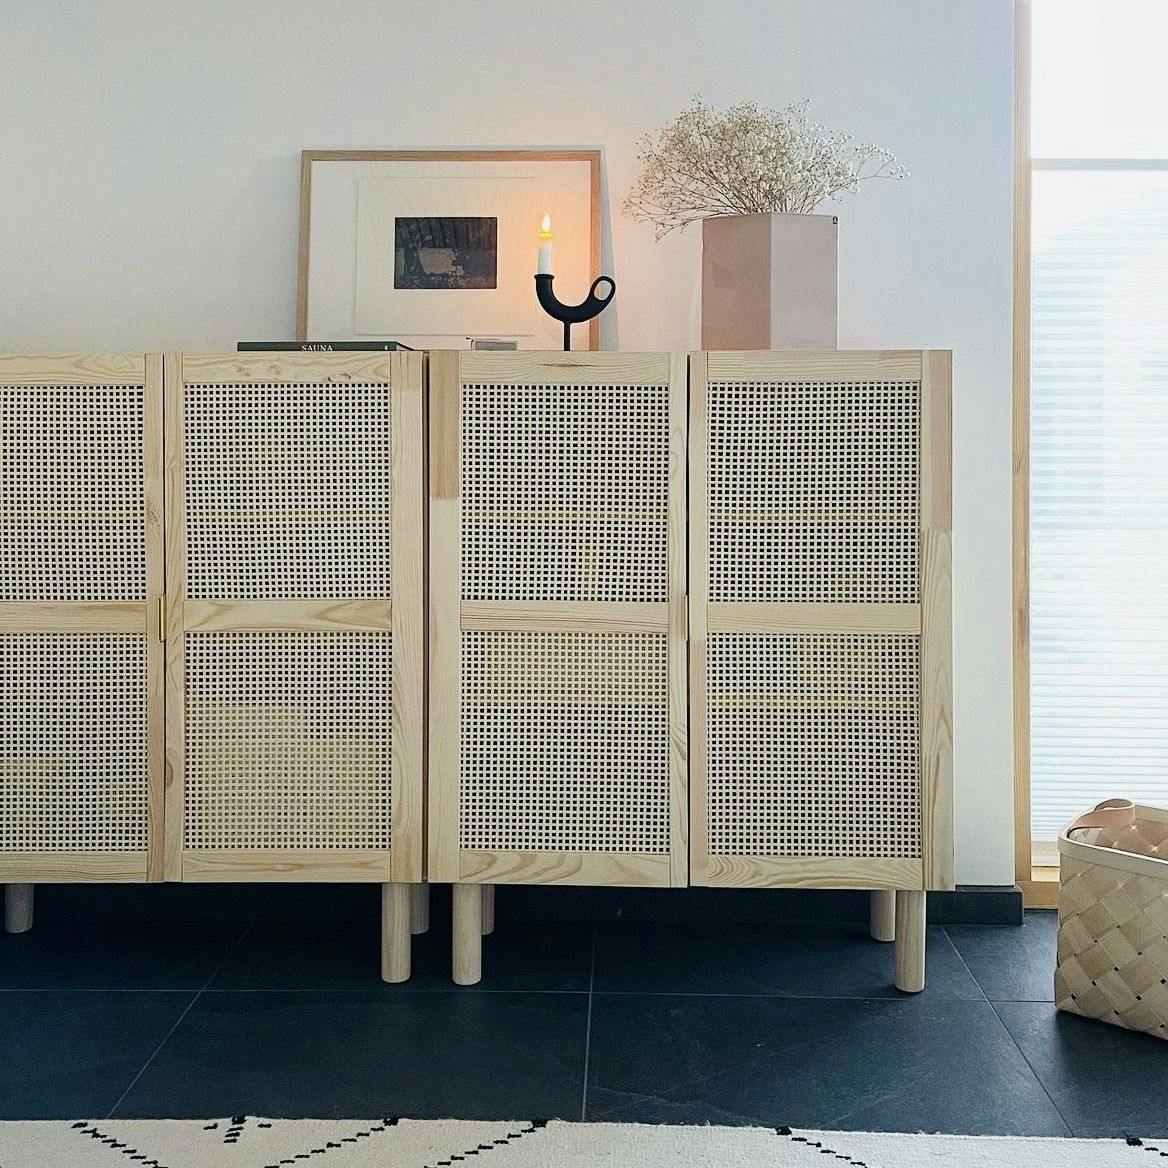 IKEa Ivar cabinet with Prettypegs furniture legs